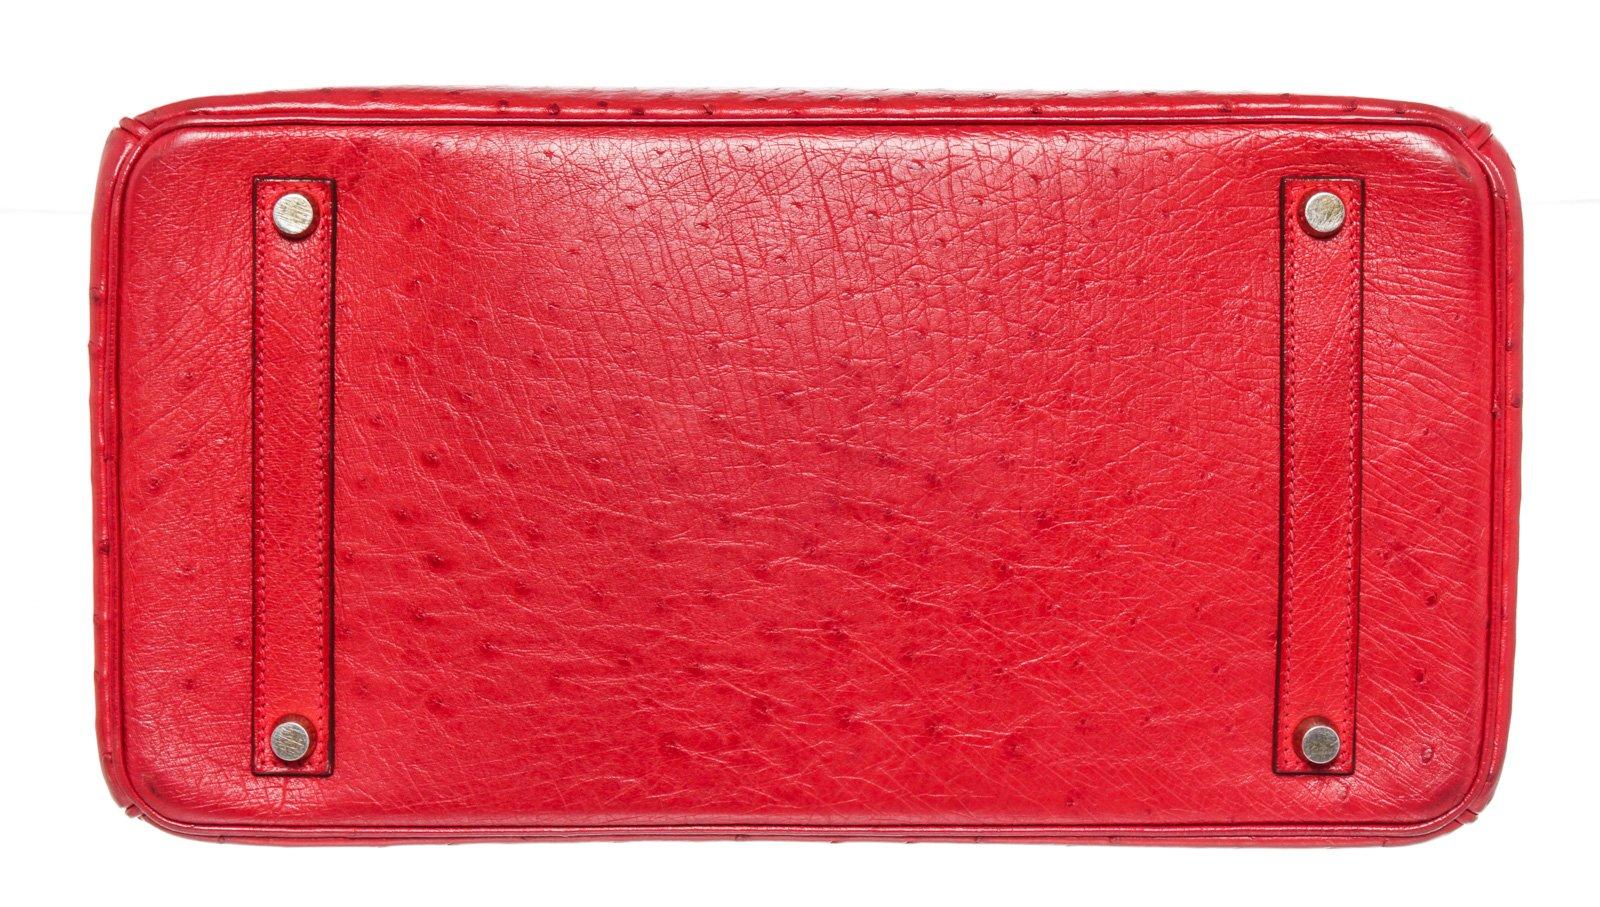 Hermes Red Leather Ostrich GHW Birkin 35cm Satchel Bag 2